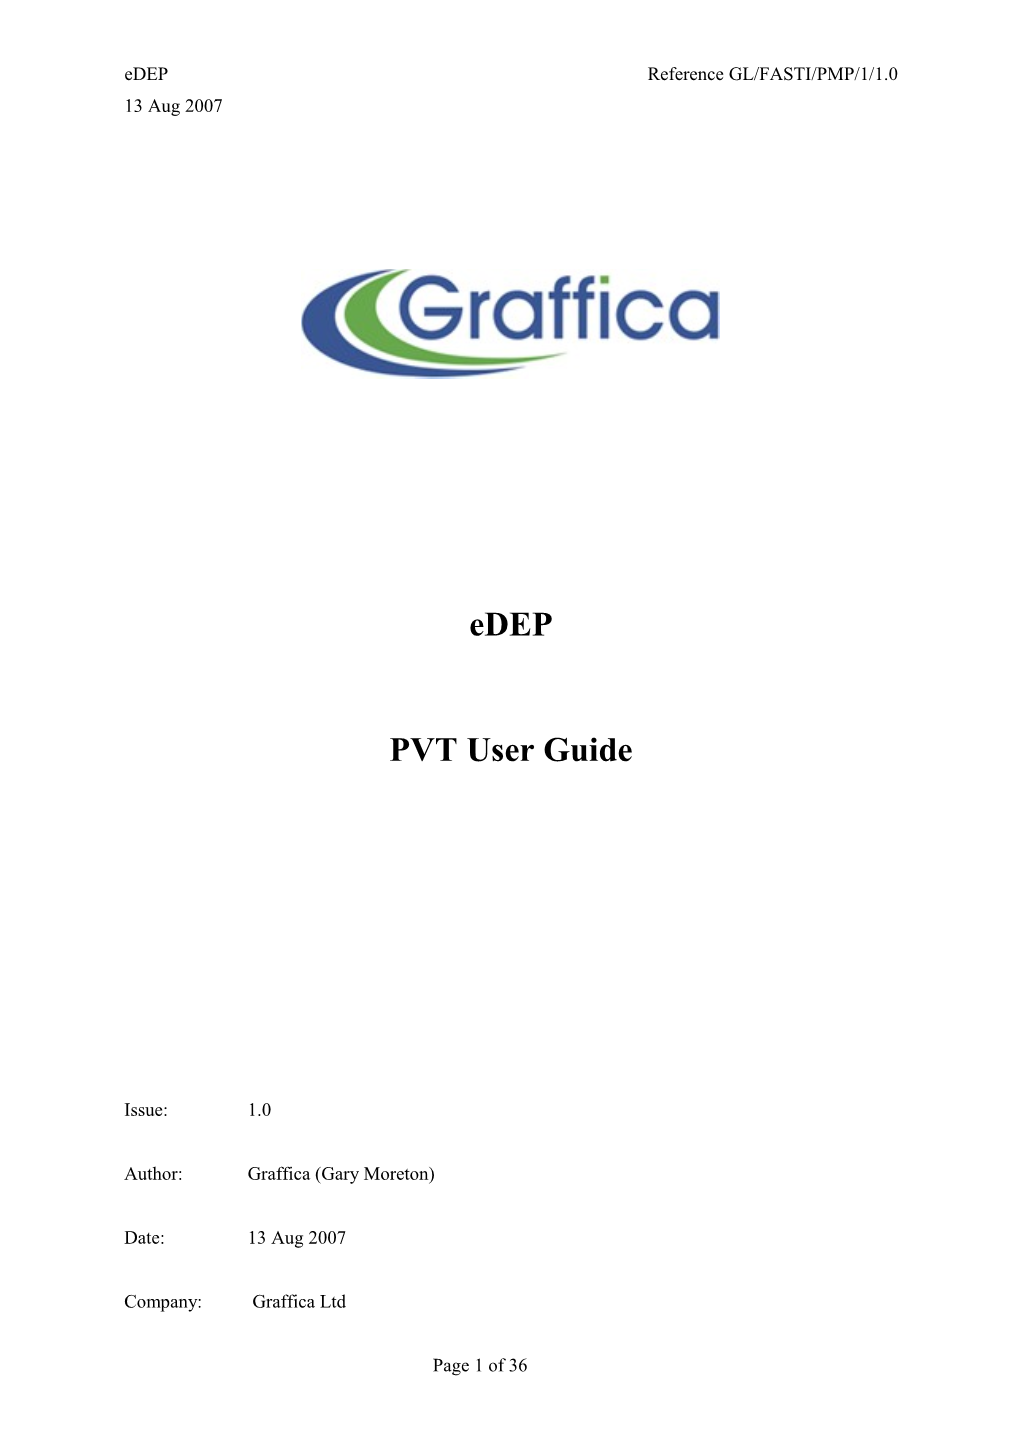 PVT User Guide